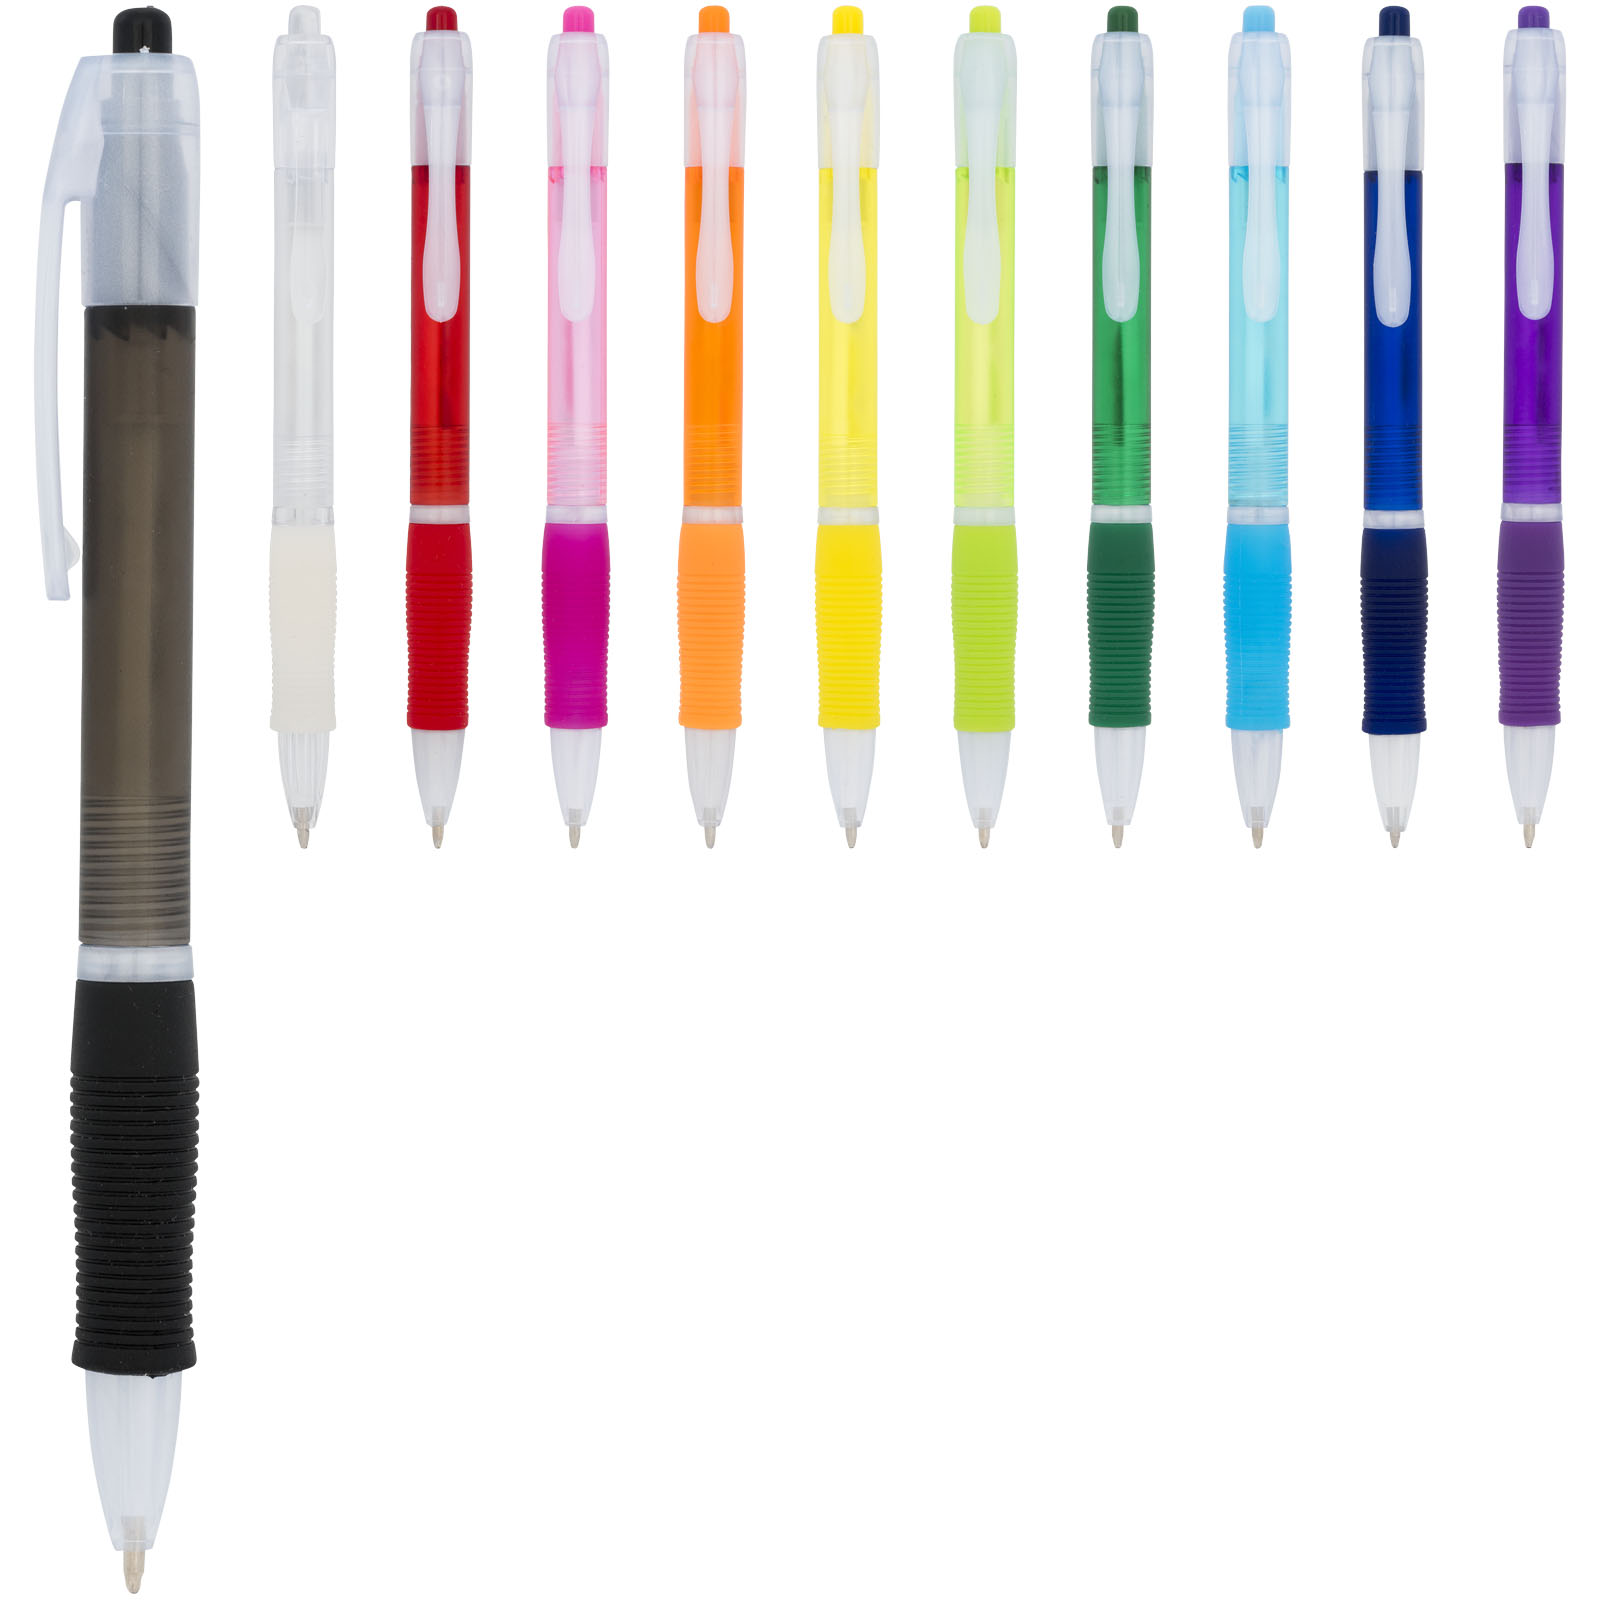 Ballpoint Pens - Trim ballpoint pen